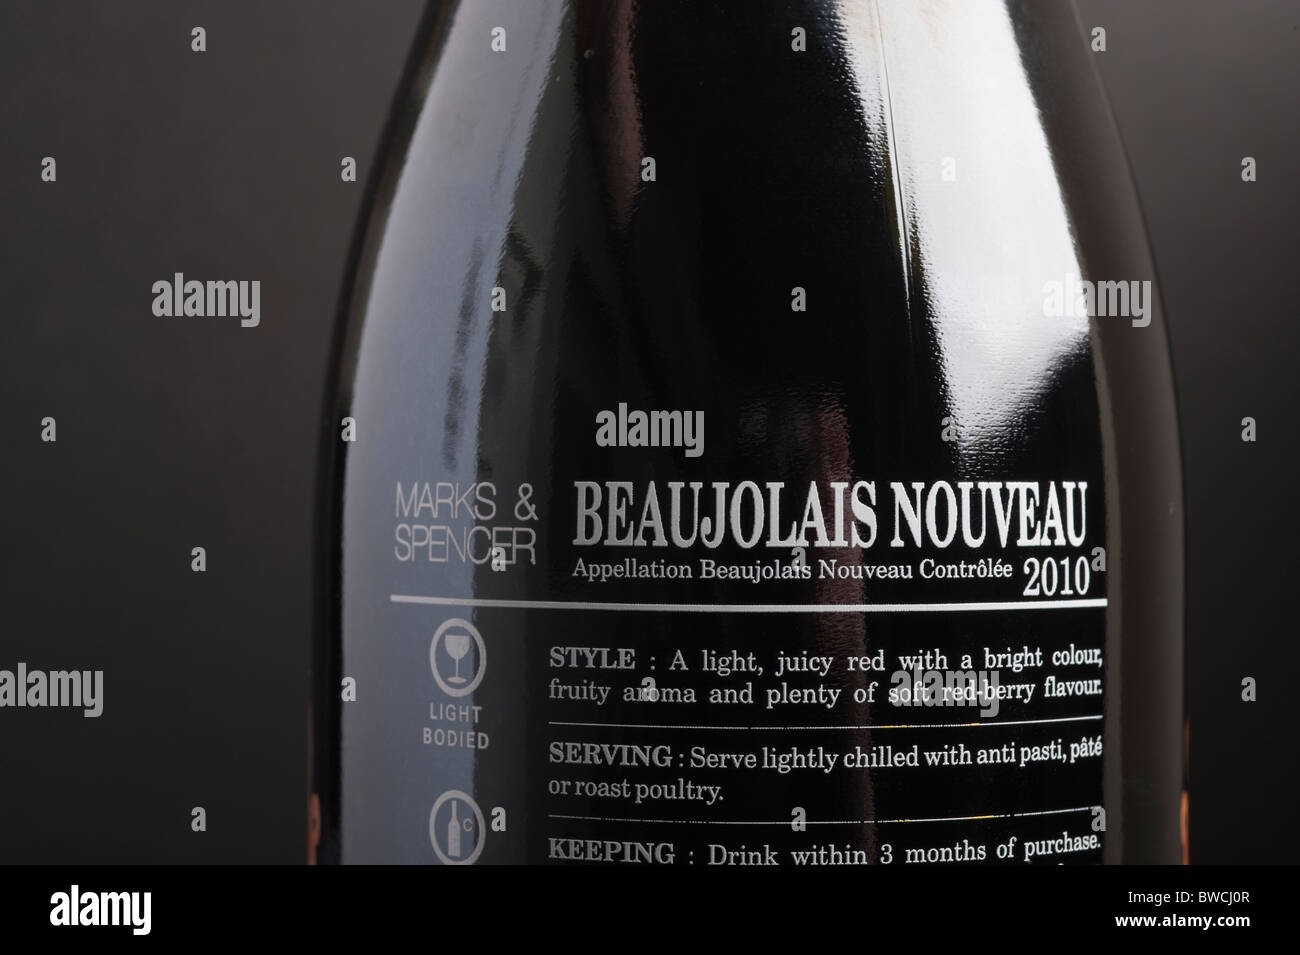 Marks & Spencer Beaujolais Nouveau 2010 vino etichetta del flacone Foto Stock